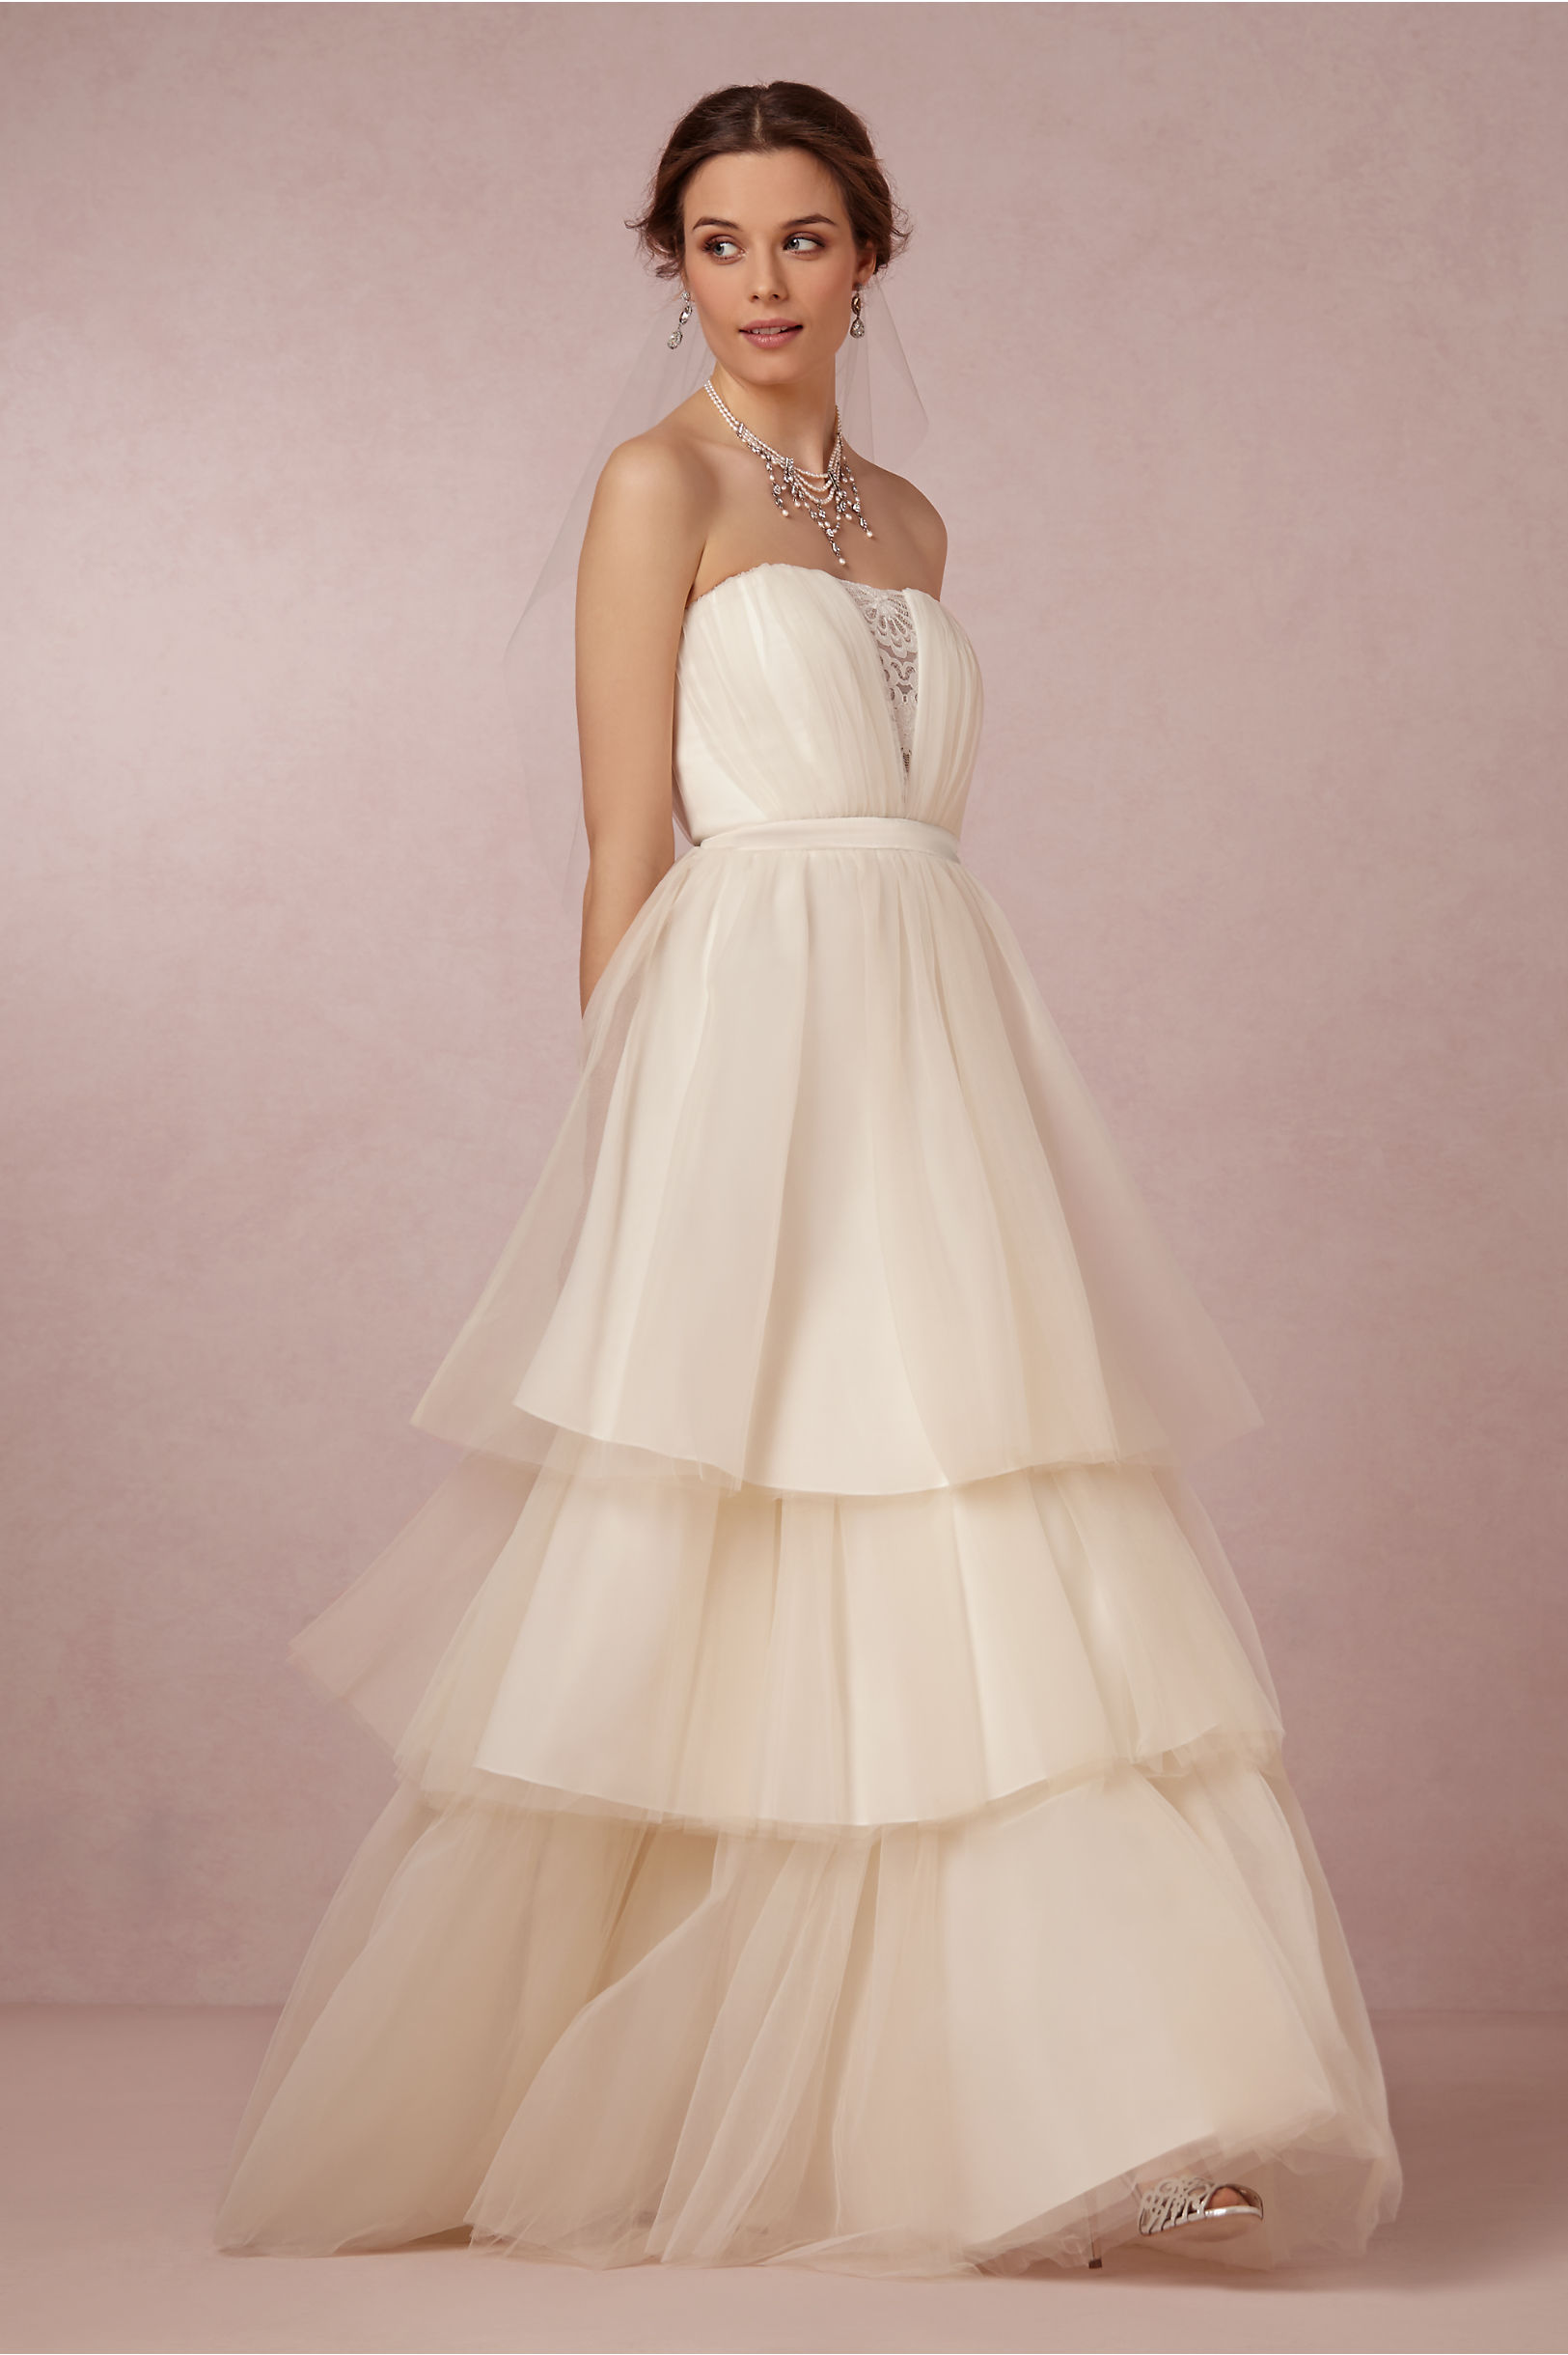 17 seriously stunning wedding dresses under $500 | Vestidos de novia,  Vestidos tejidos de novia, Vestidos de novia gorditas